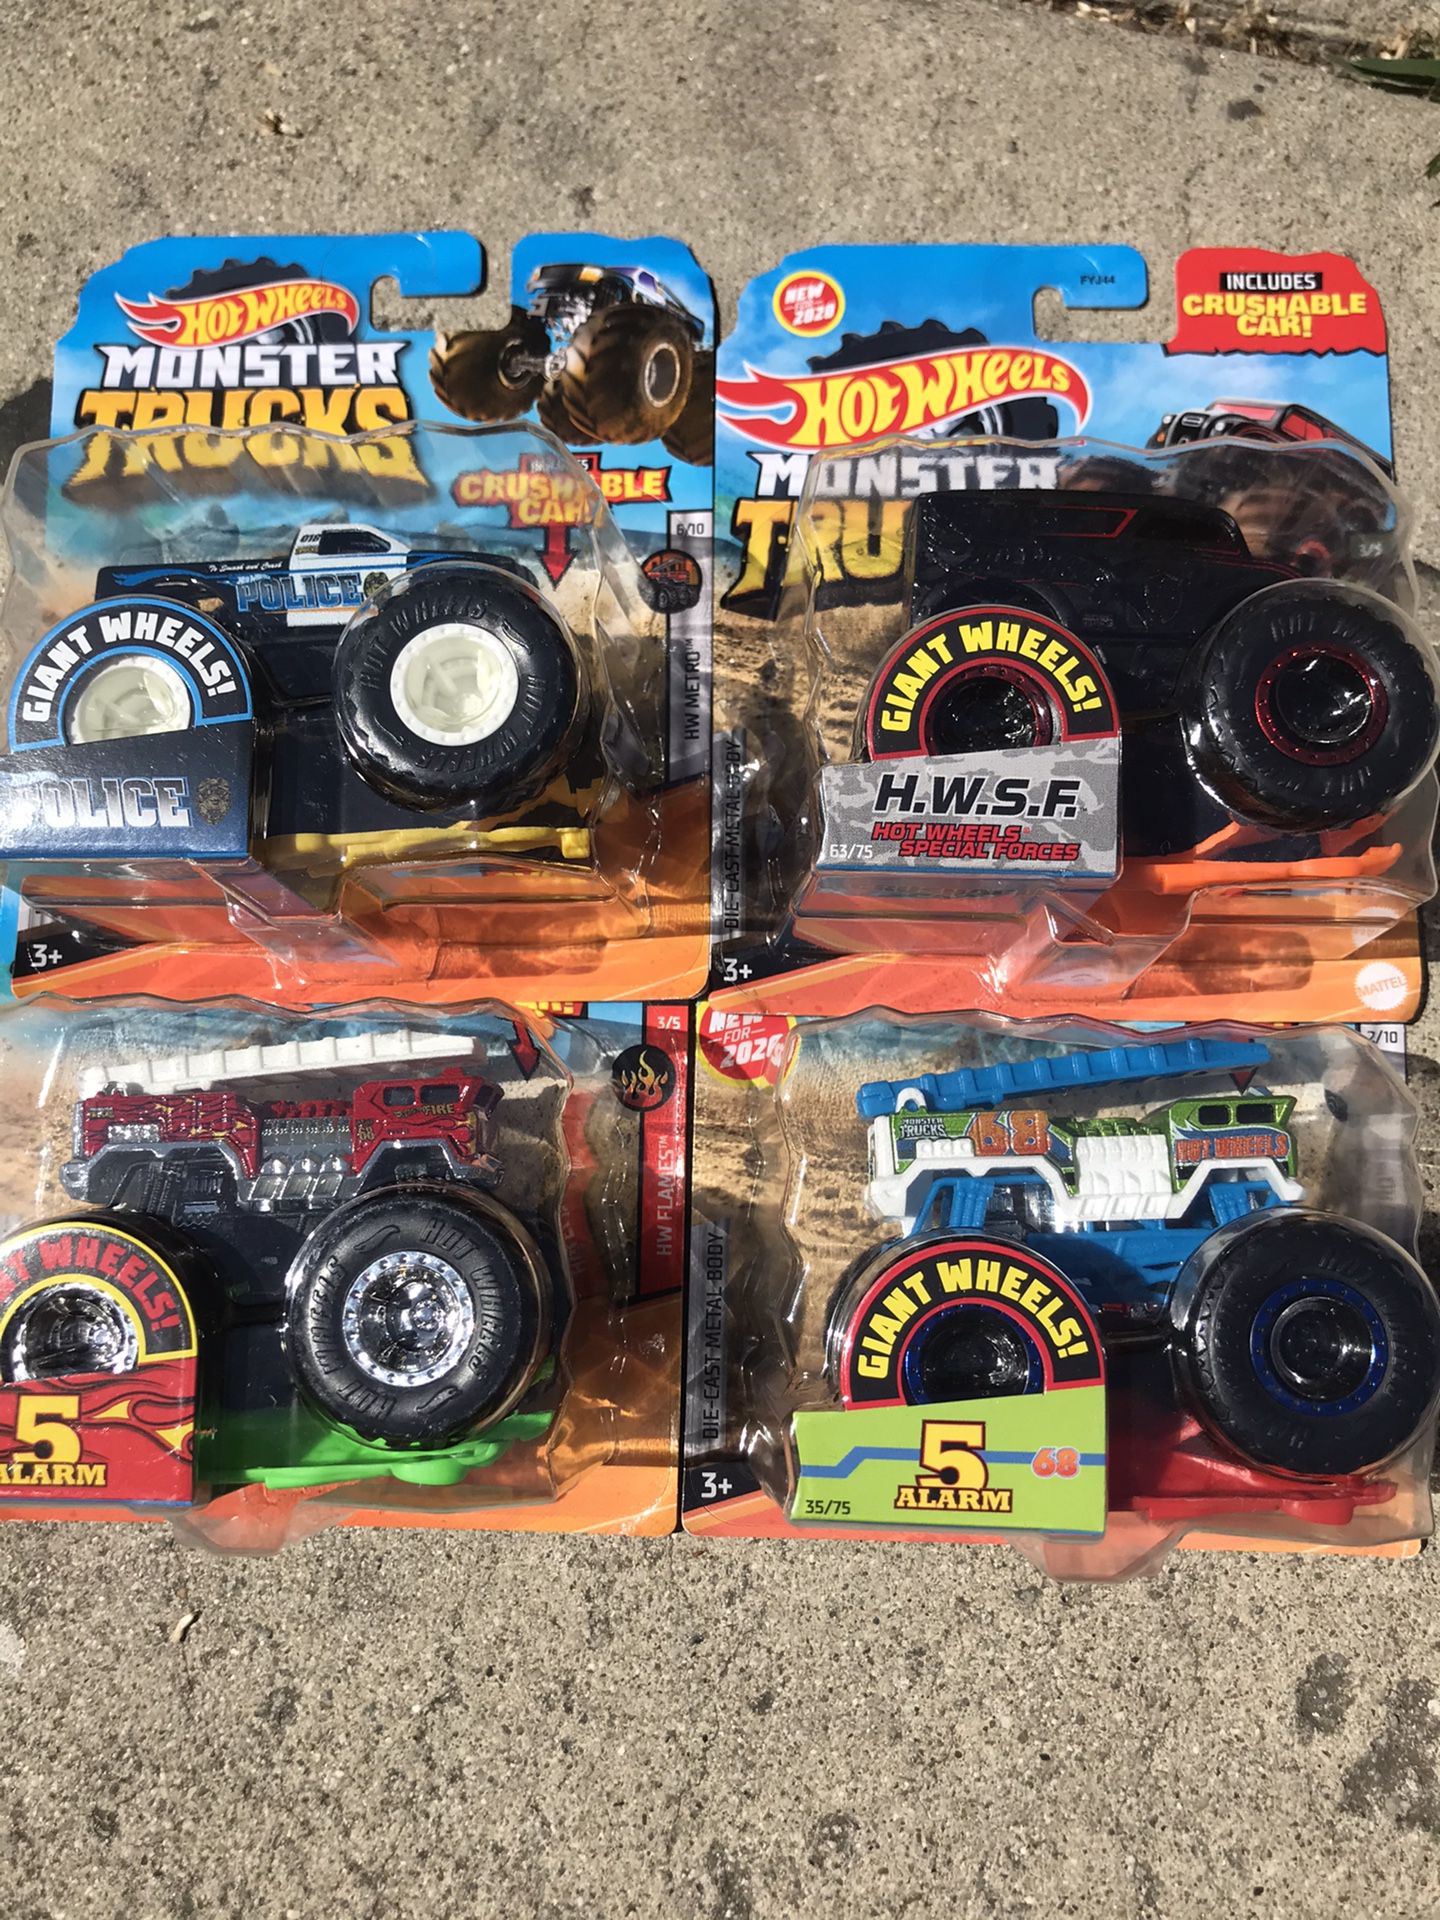 Hotwheels monster trucks